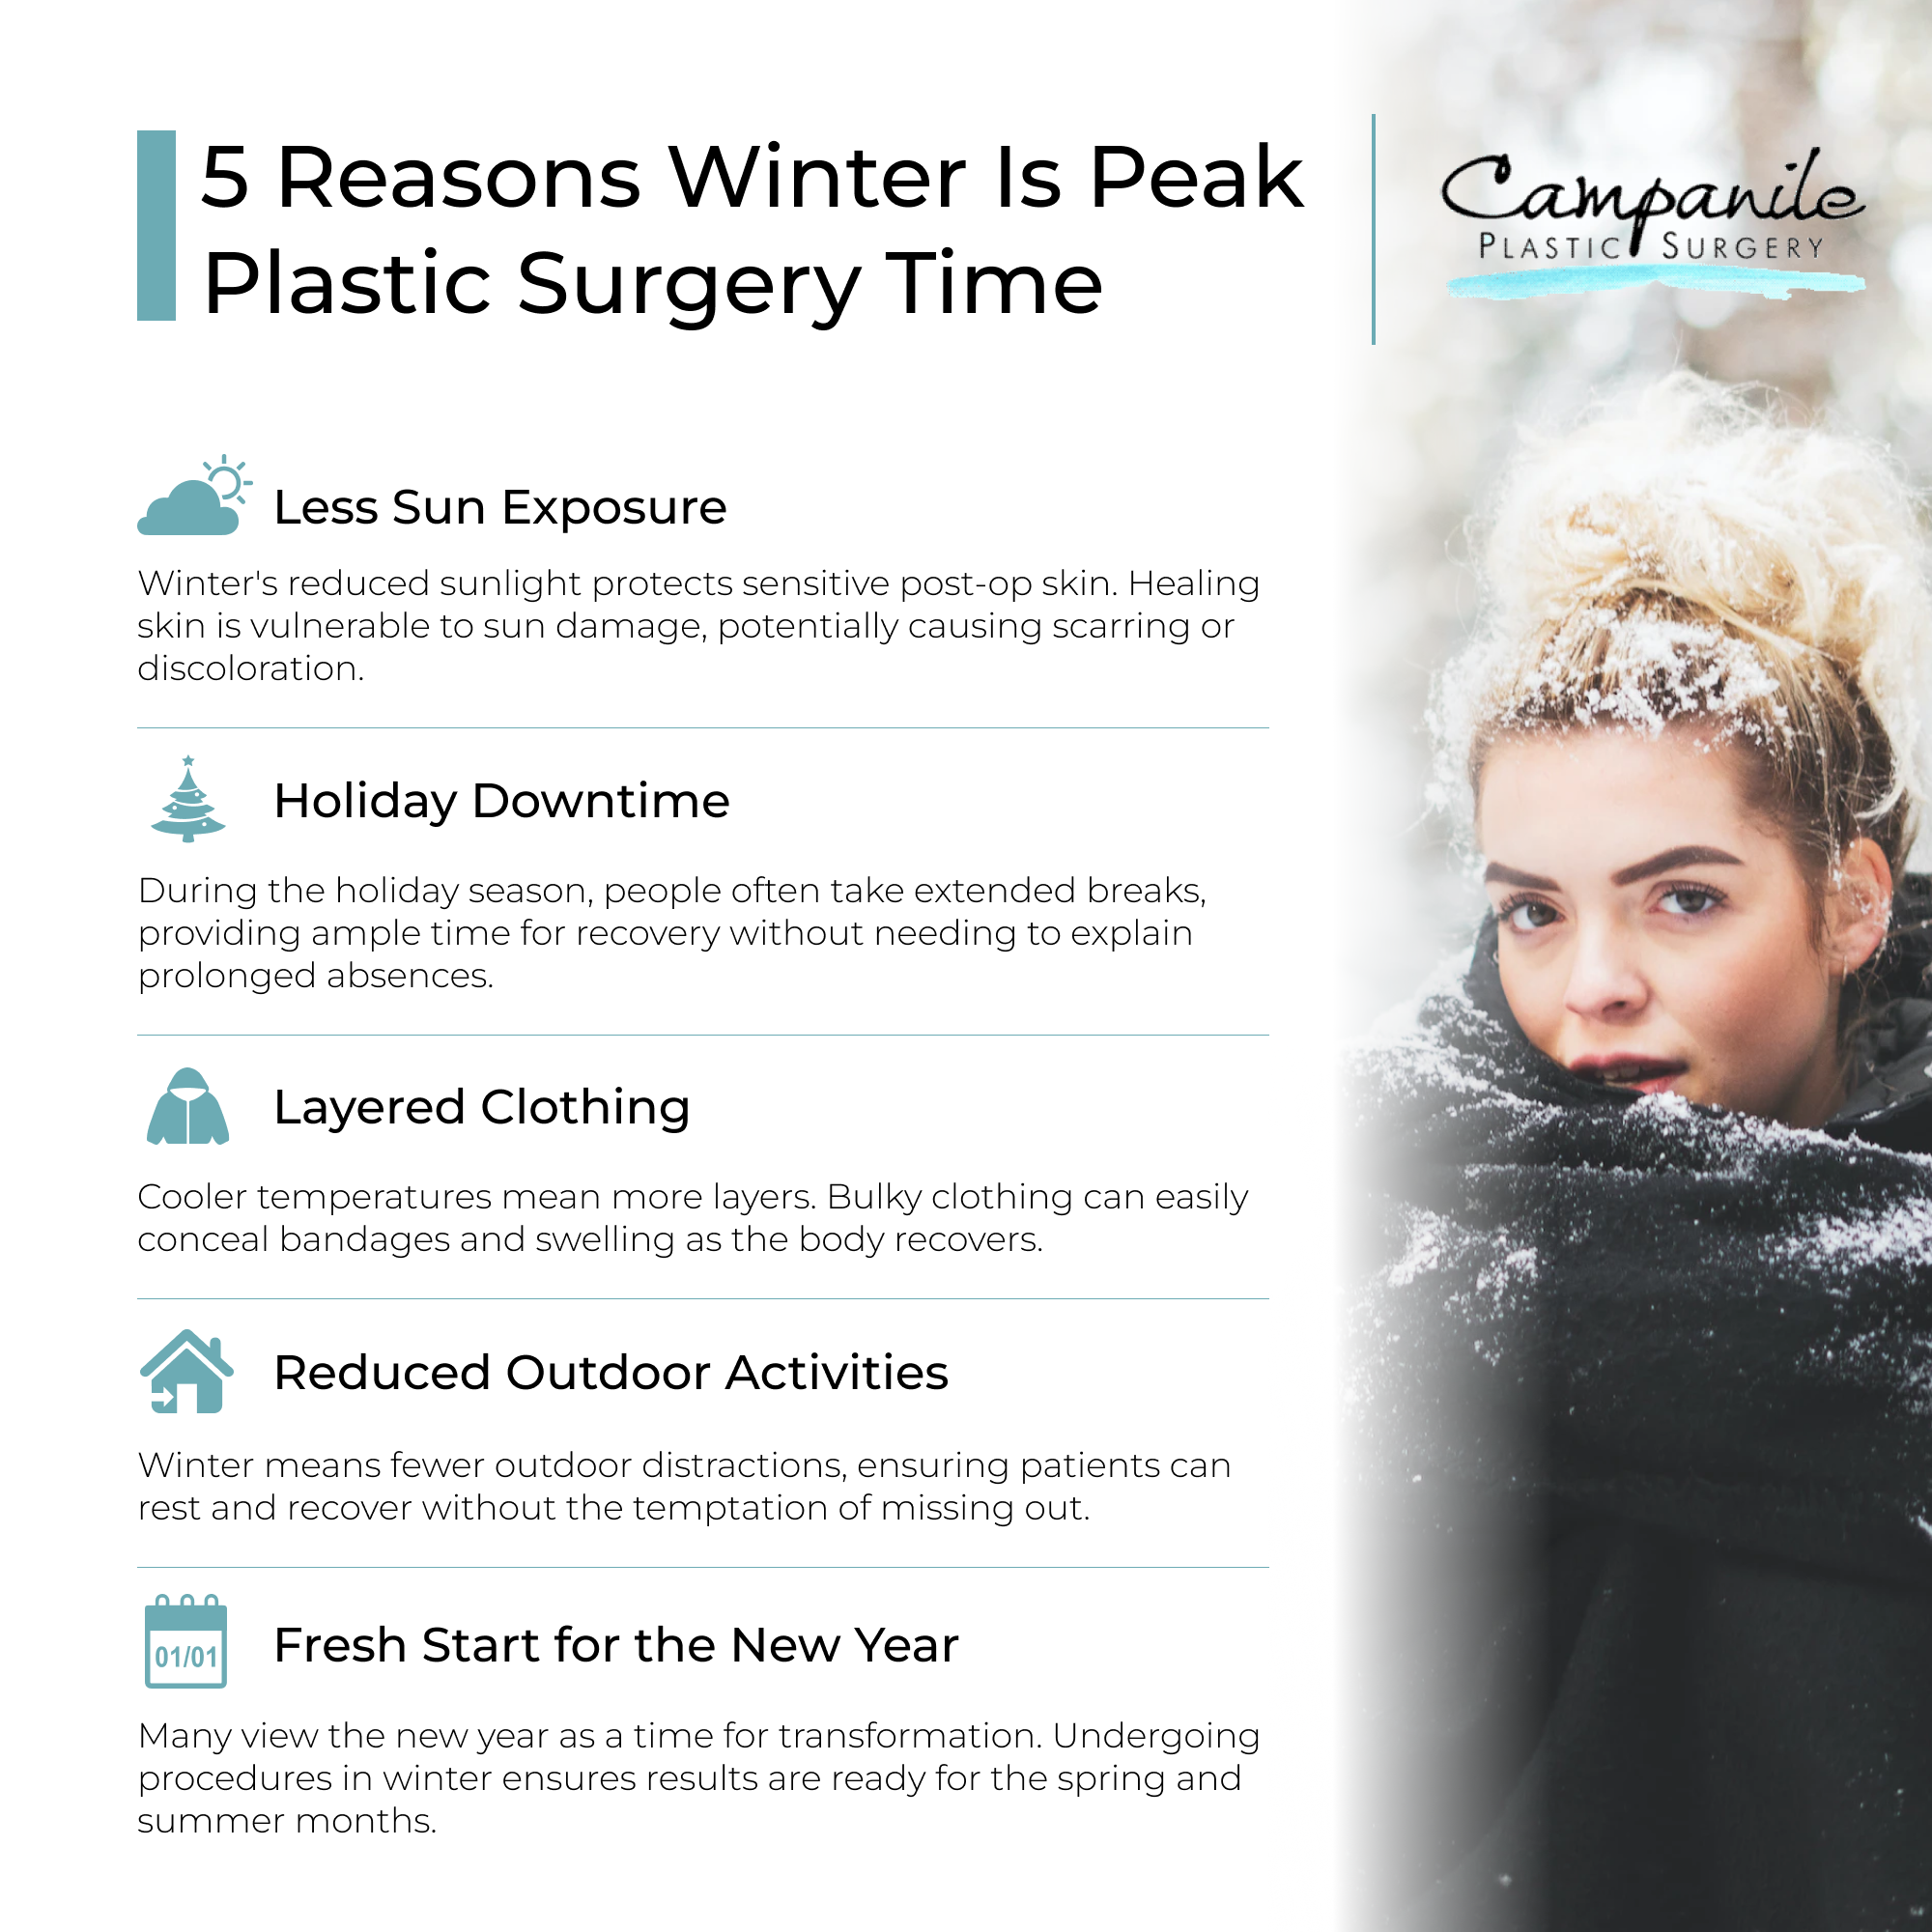 5 Reasons Winter is Peak Plastic Surgery Time